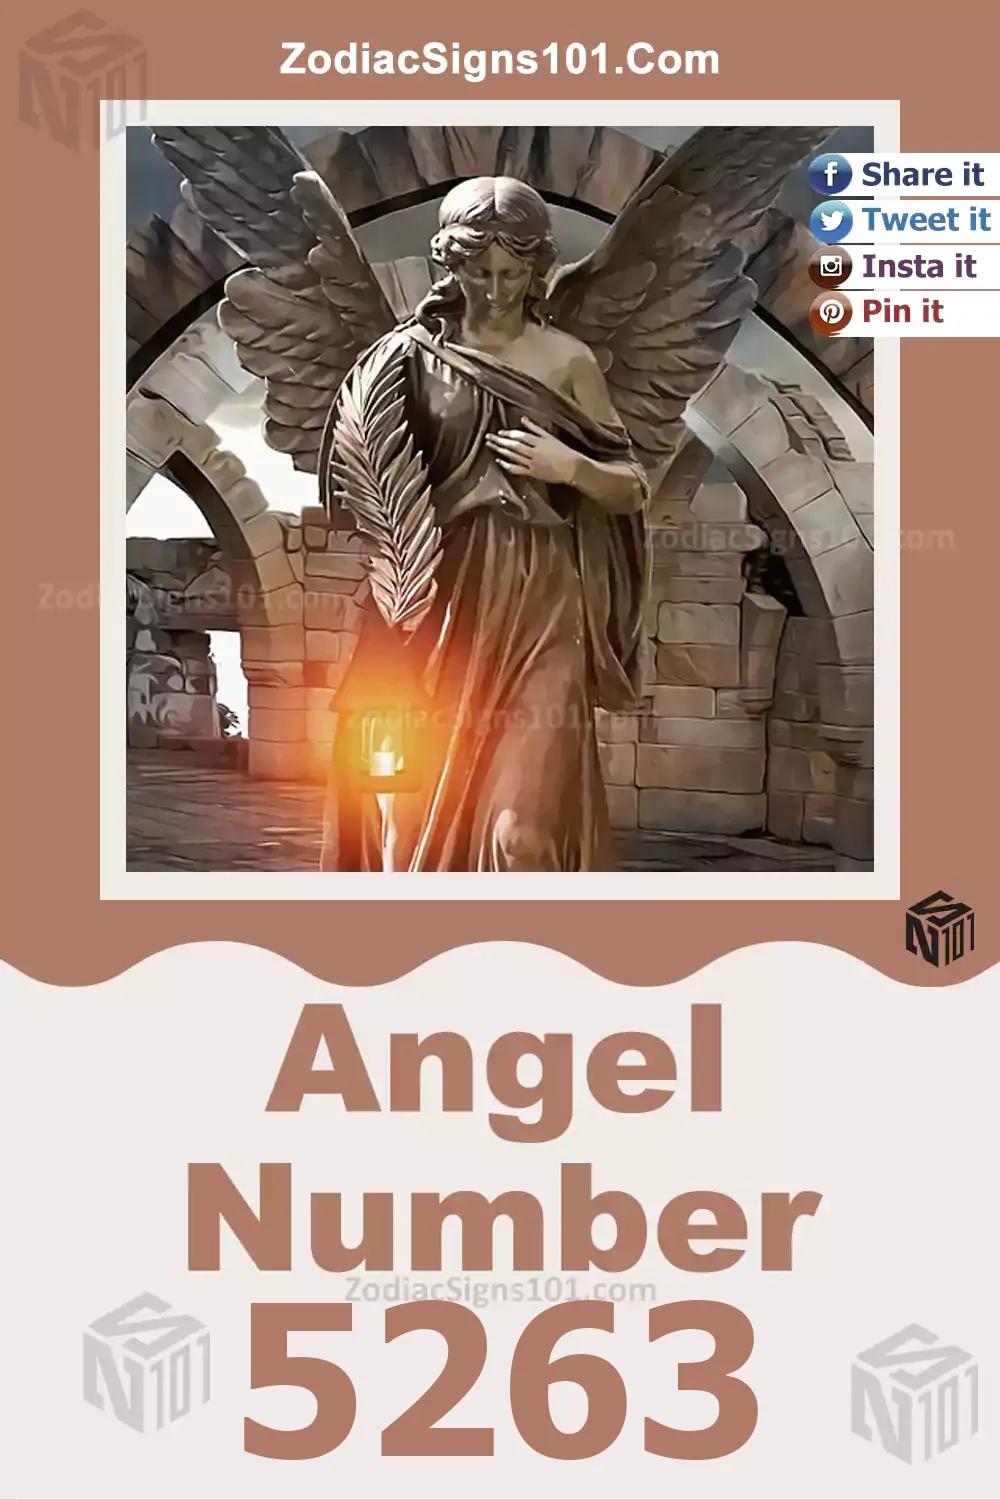 5263-Angel-Number-Meaning.jpg